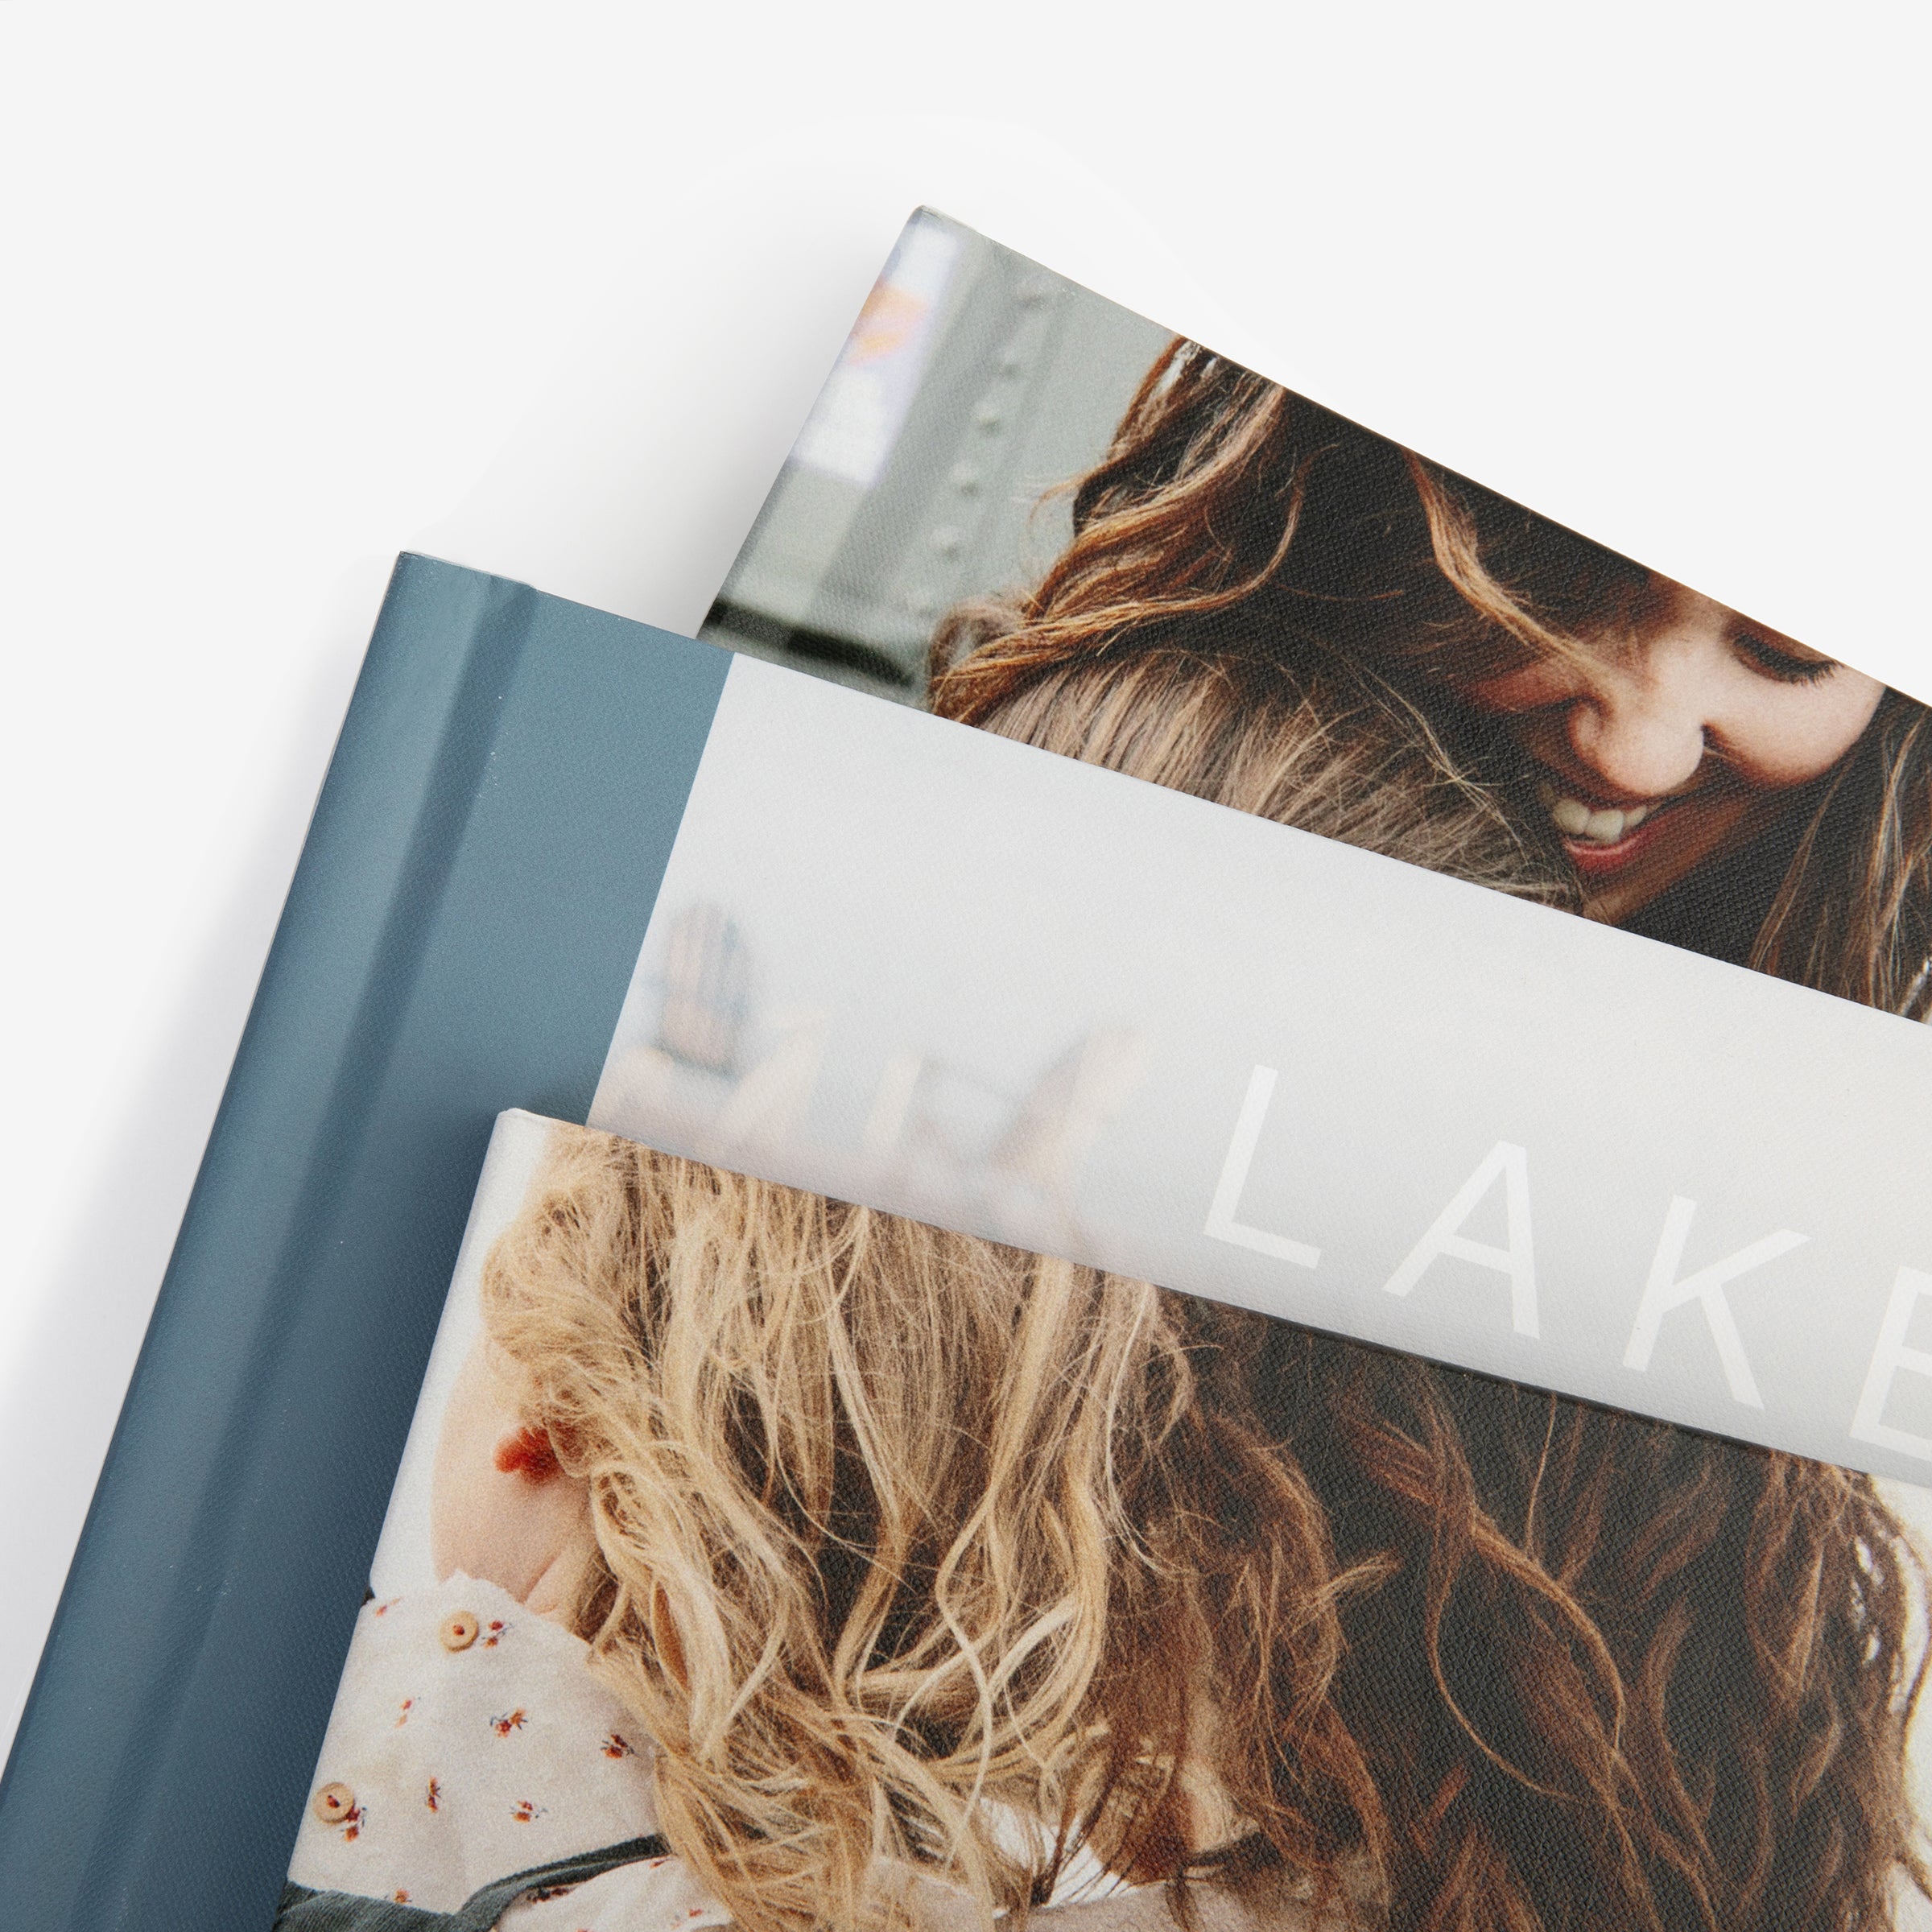 Photo-Wrapped Layflat Album